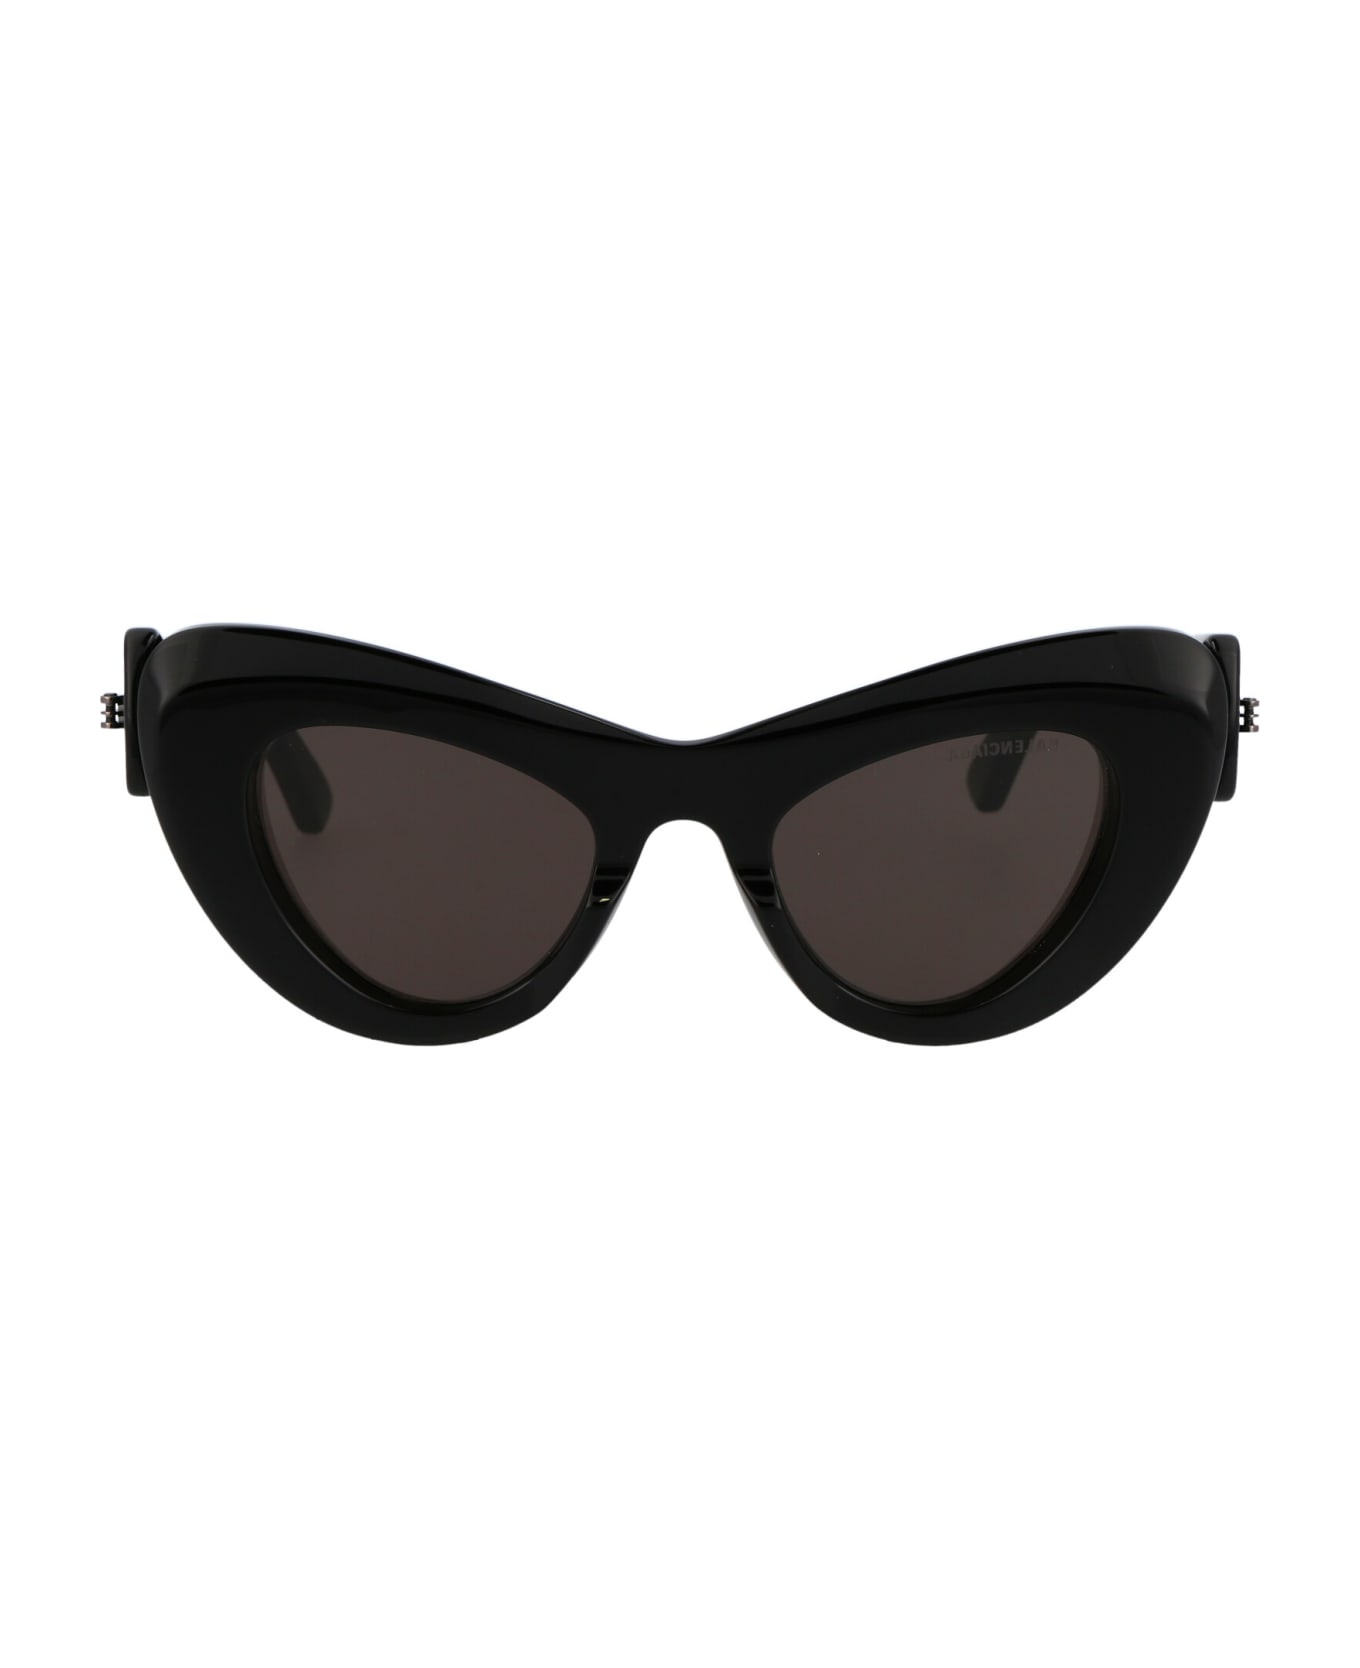 Balenciaga Eyewear Bb0204s Sunglasses - 001 BLACK BLACK GREY サングラス